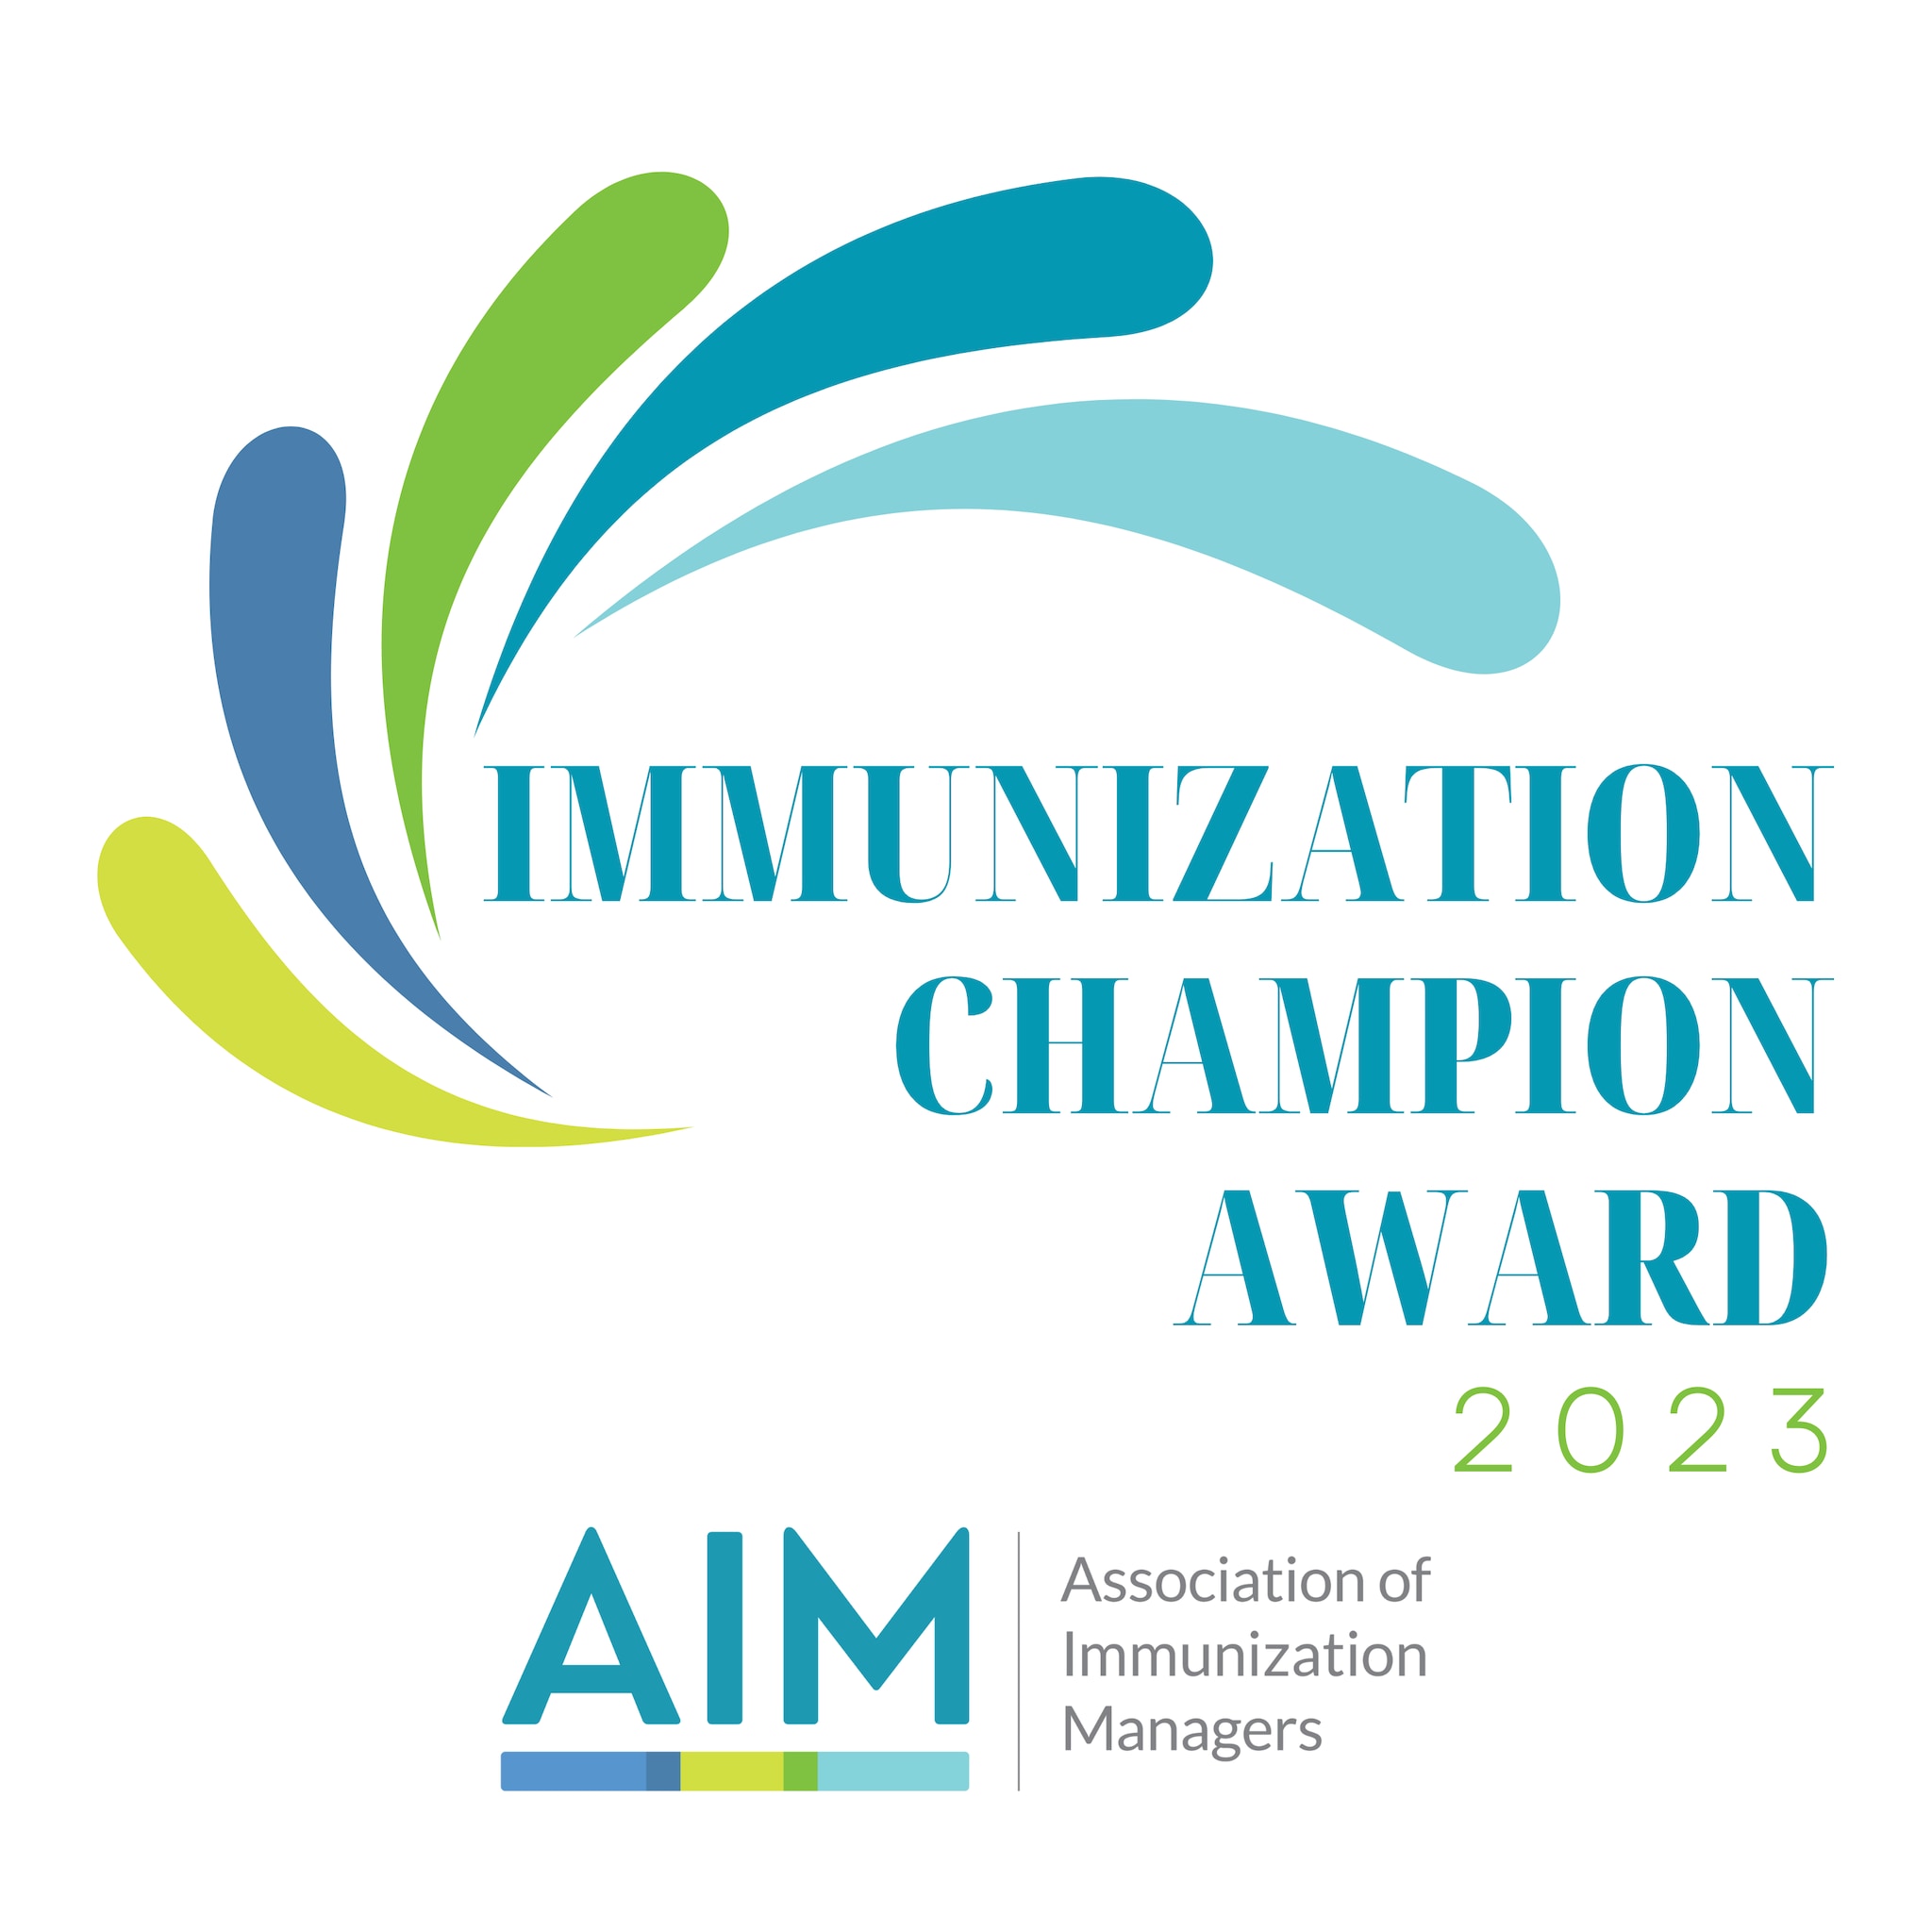 Immunization Champion Award 2022